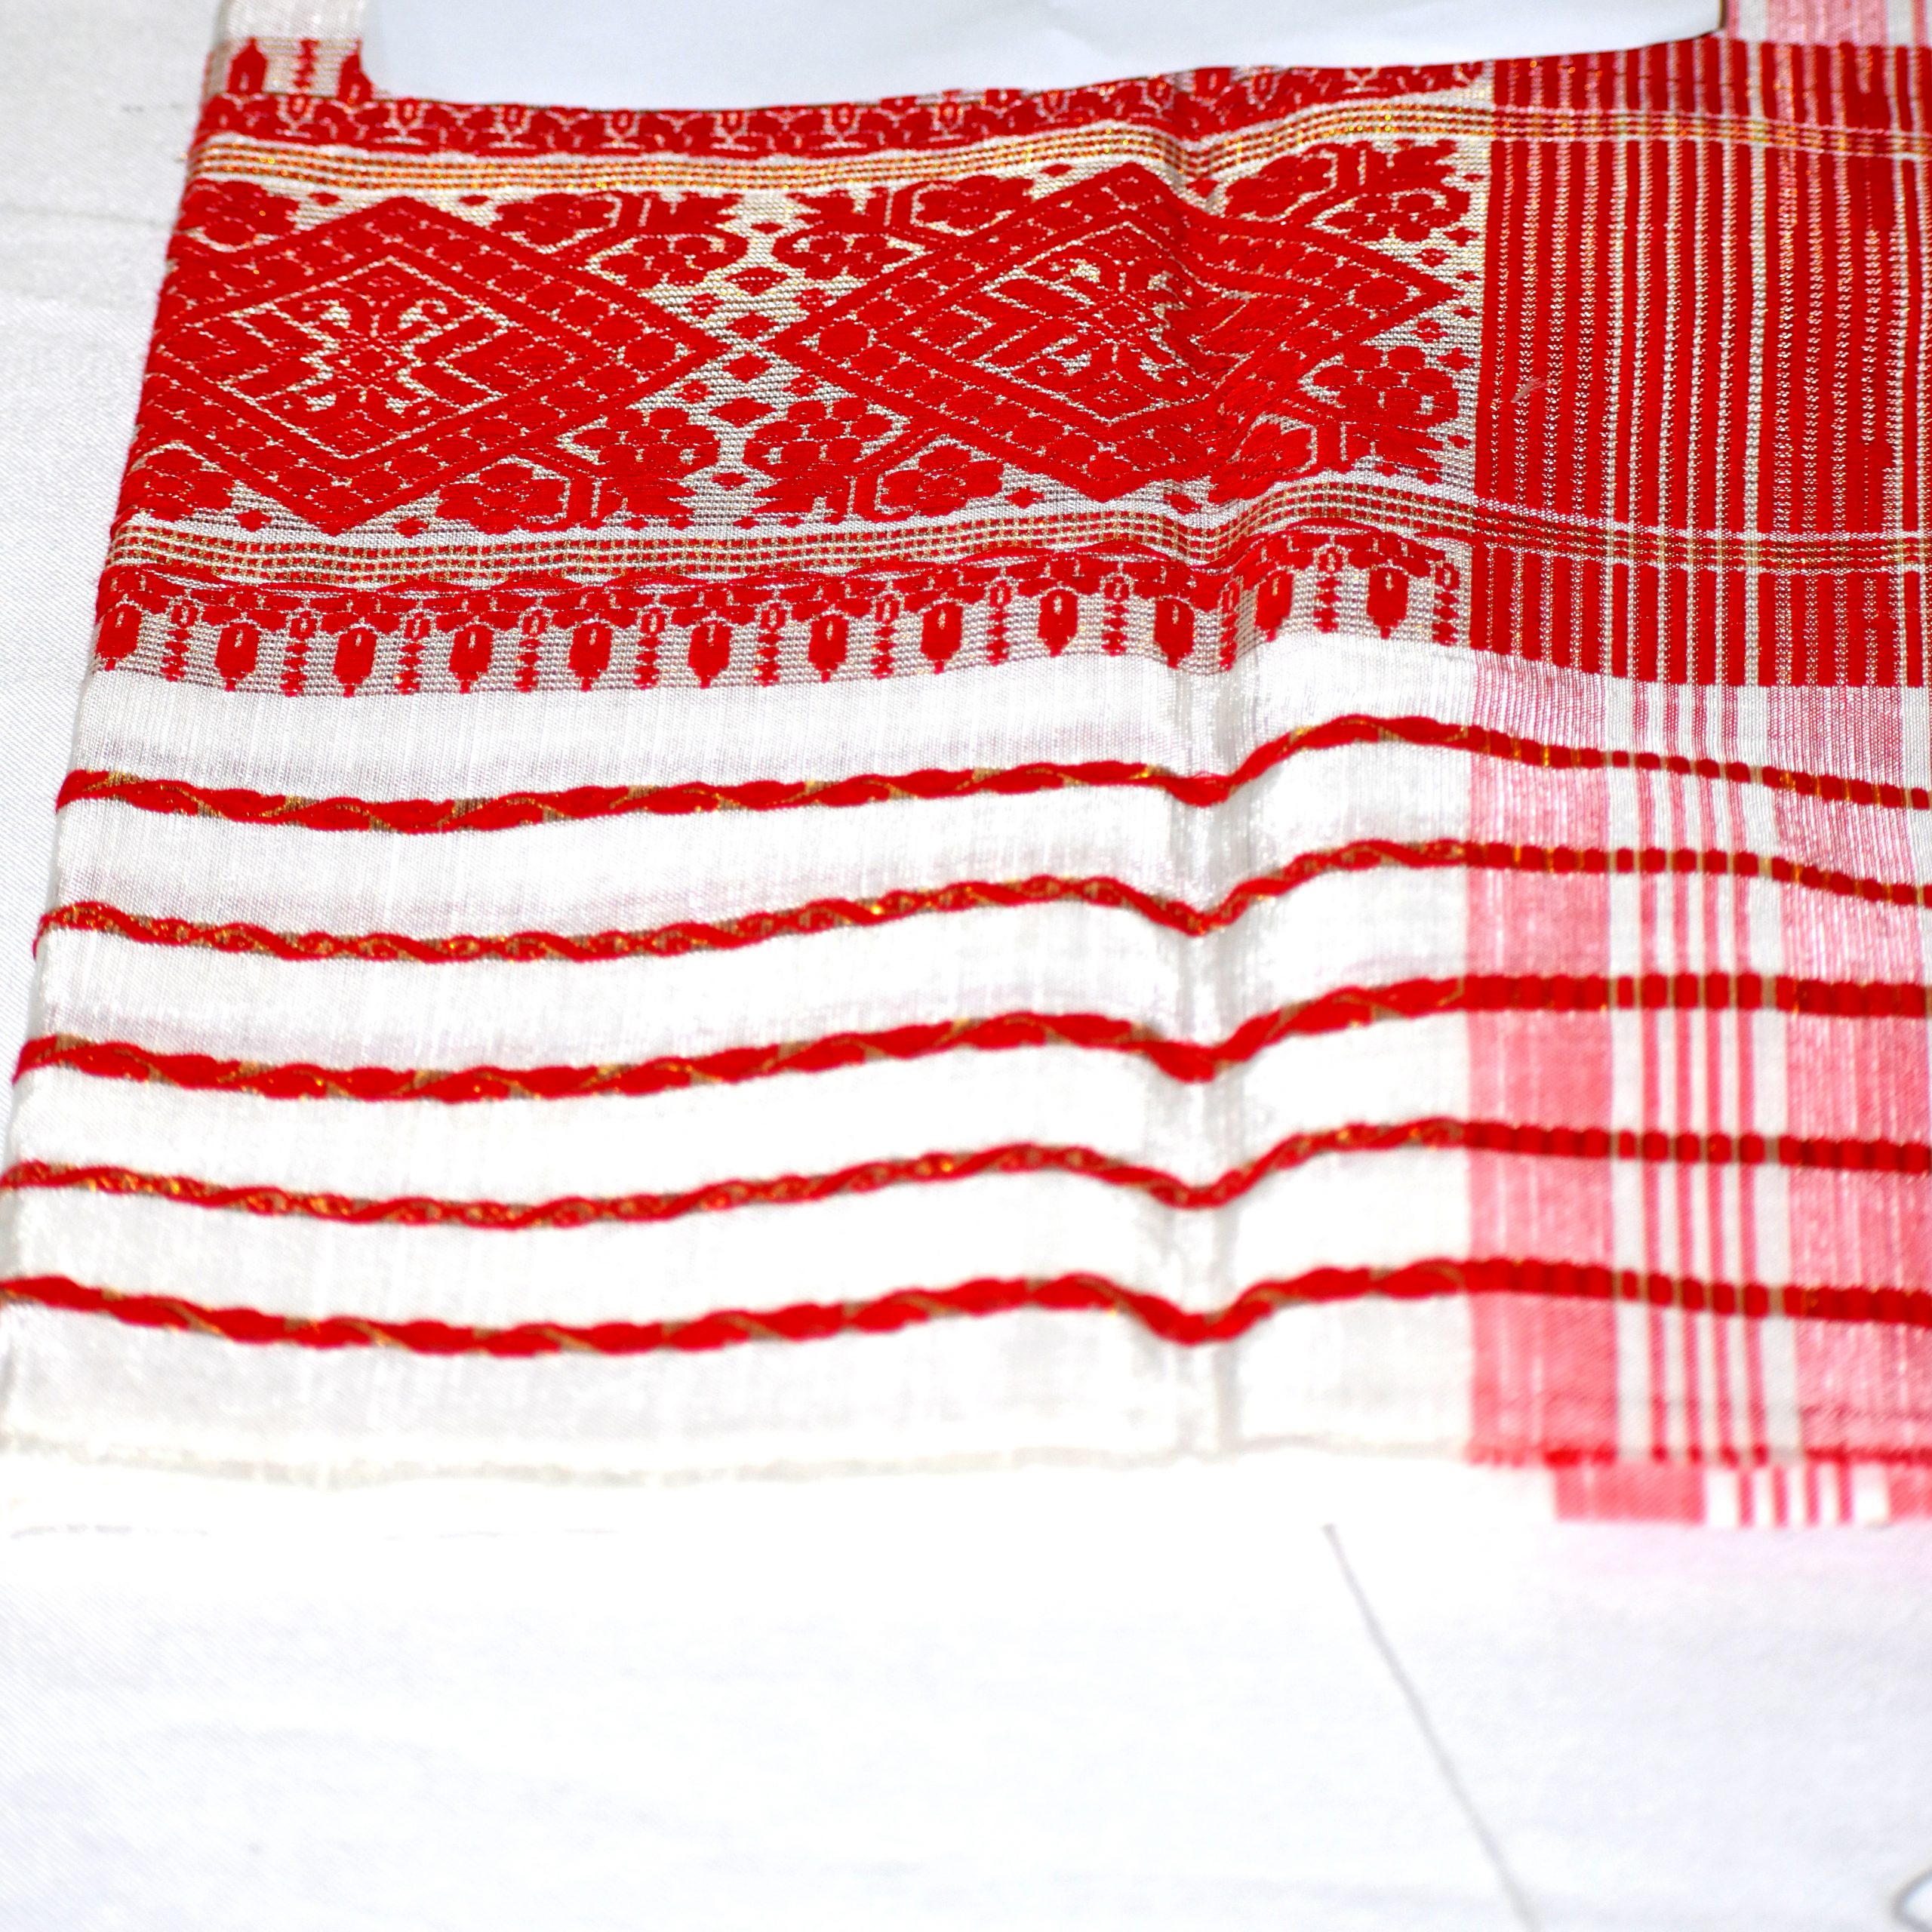 assamese gamosa  gamusa  gamocha  textile background gamusa pattern or  gamosa border gamosa is a traditional cloth of assamn  Pattern  Textiles Traditional